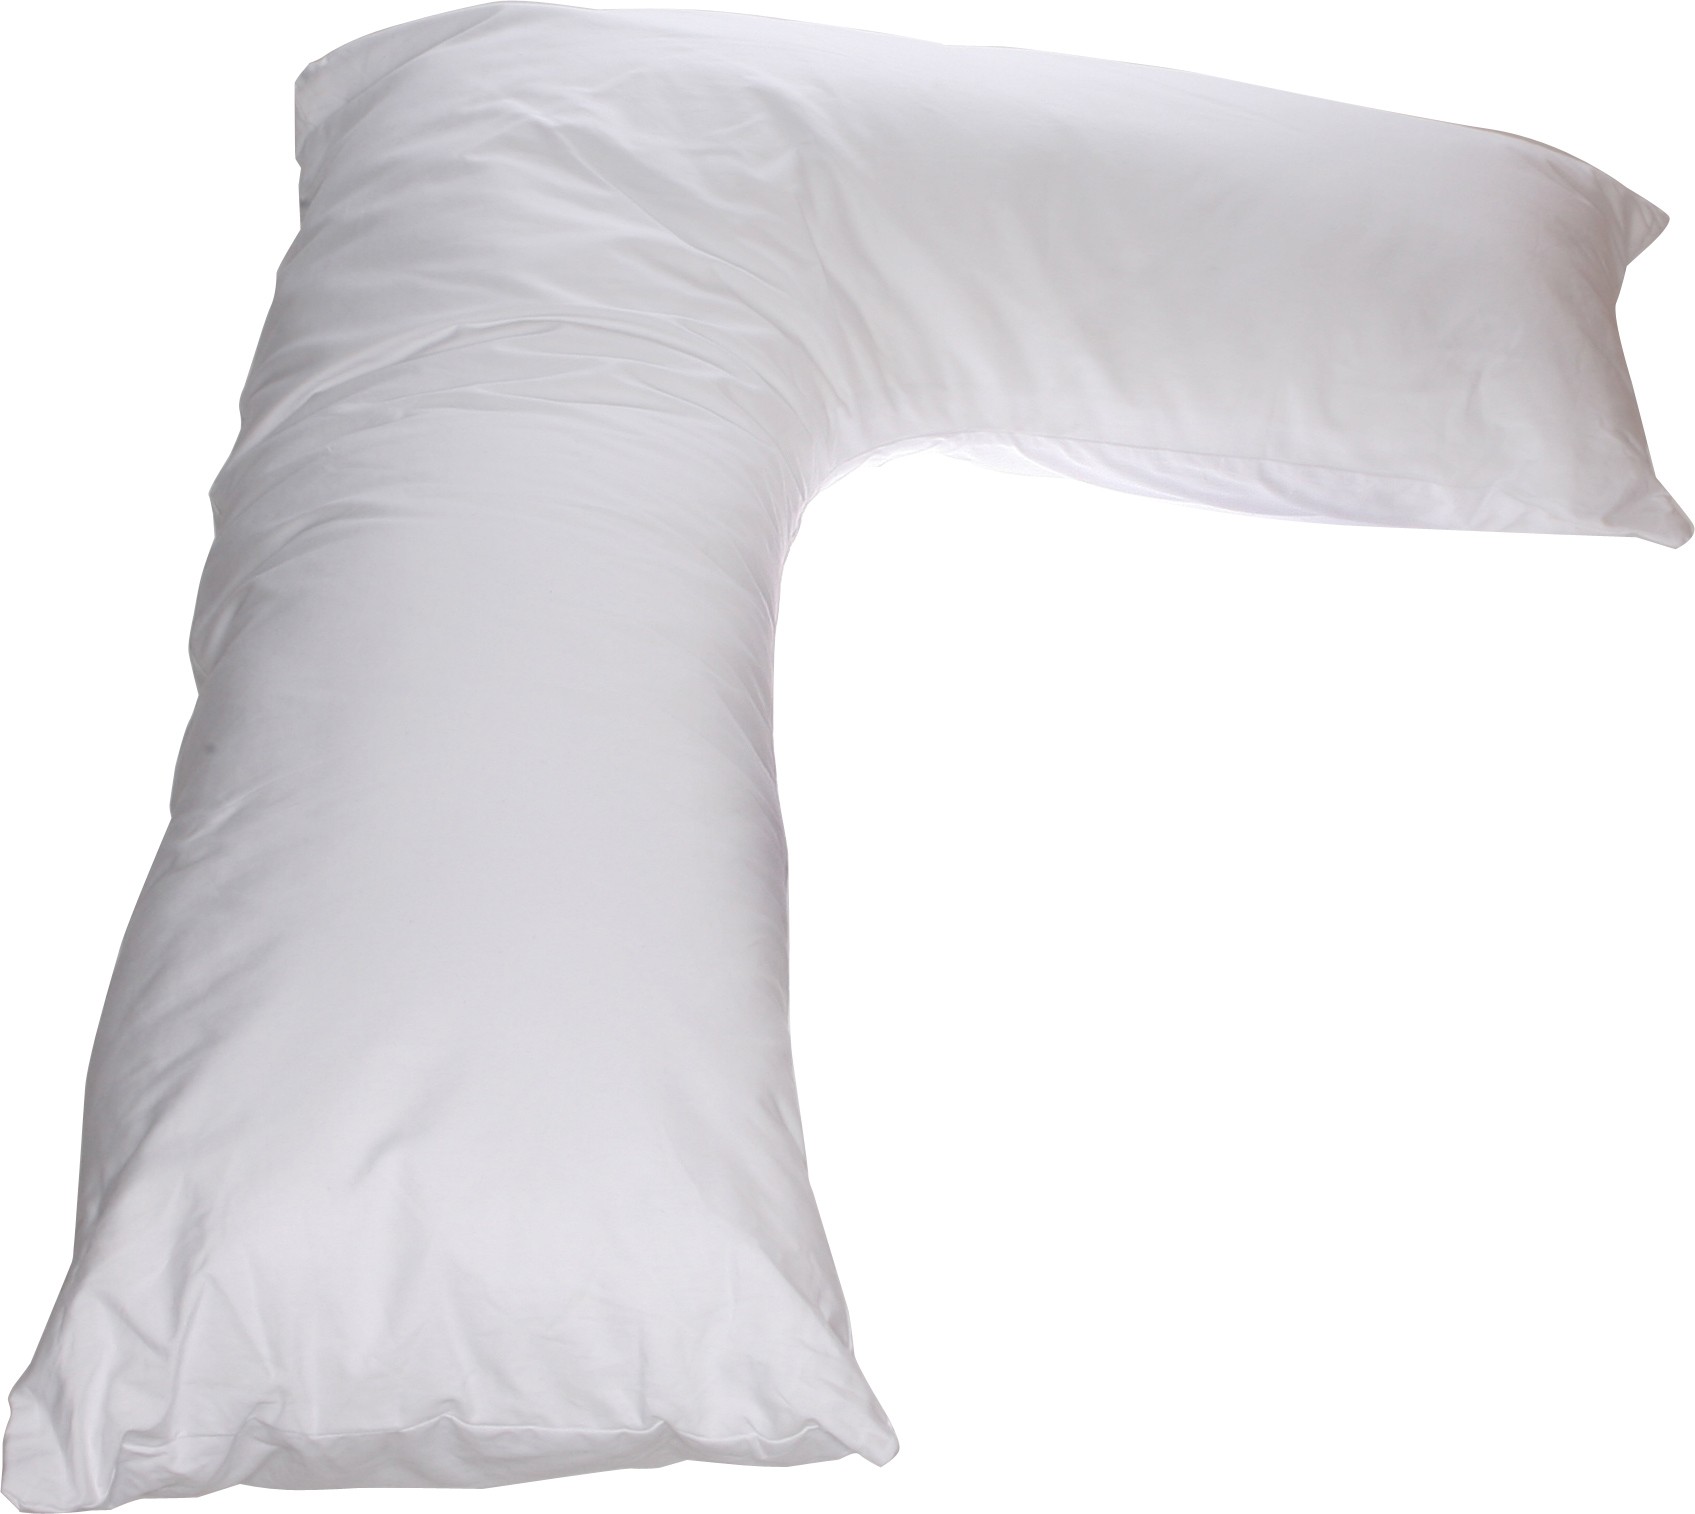 pillow shapes